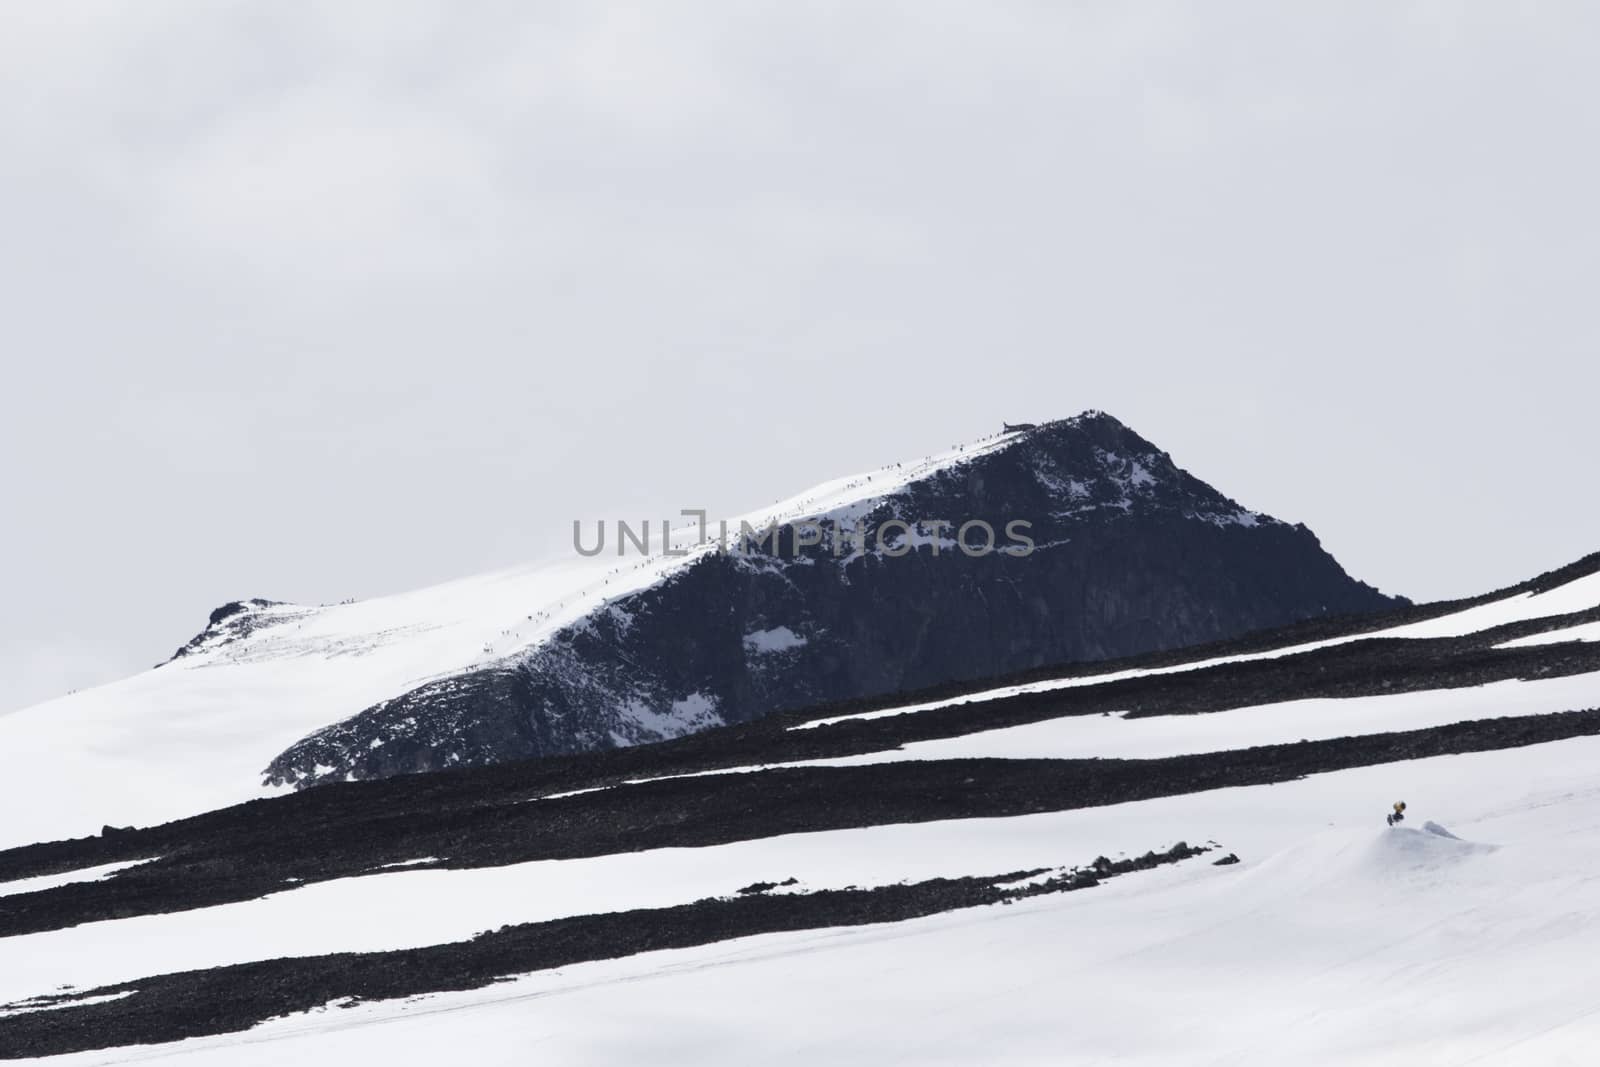 Galdhopiggen mountain in jotunheimen norway highest mountain in north europe